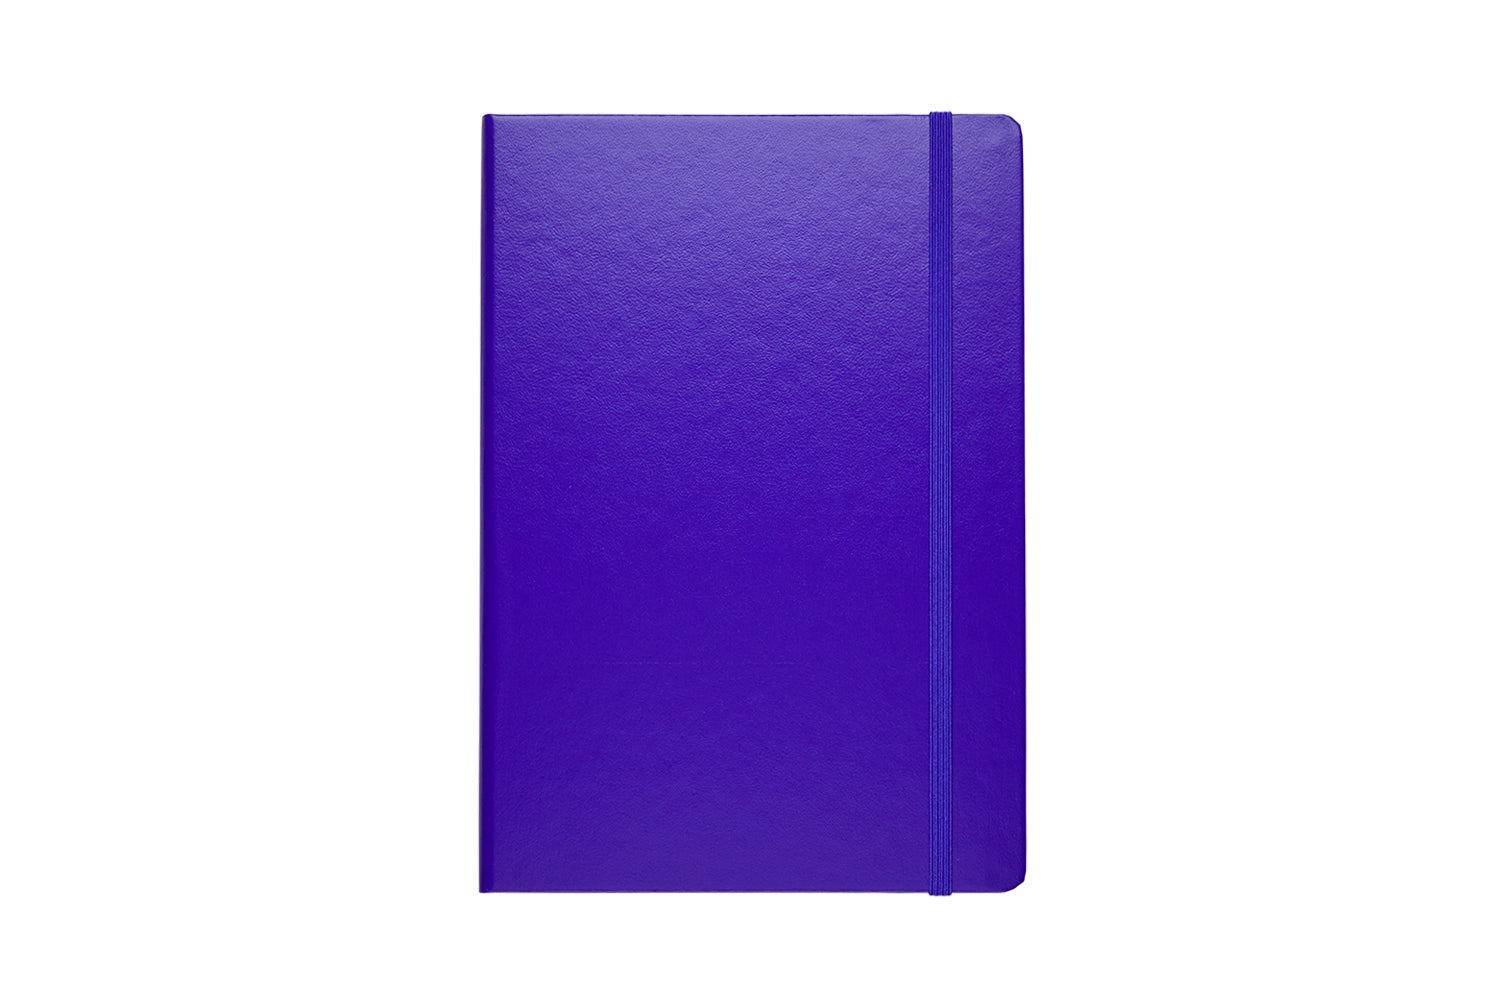 Leuchtturm1917 Hardback Pocket Notebook Dotted A6